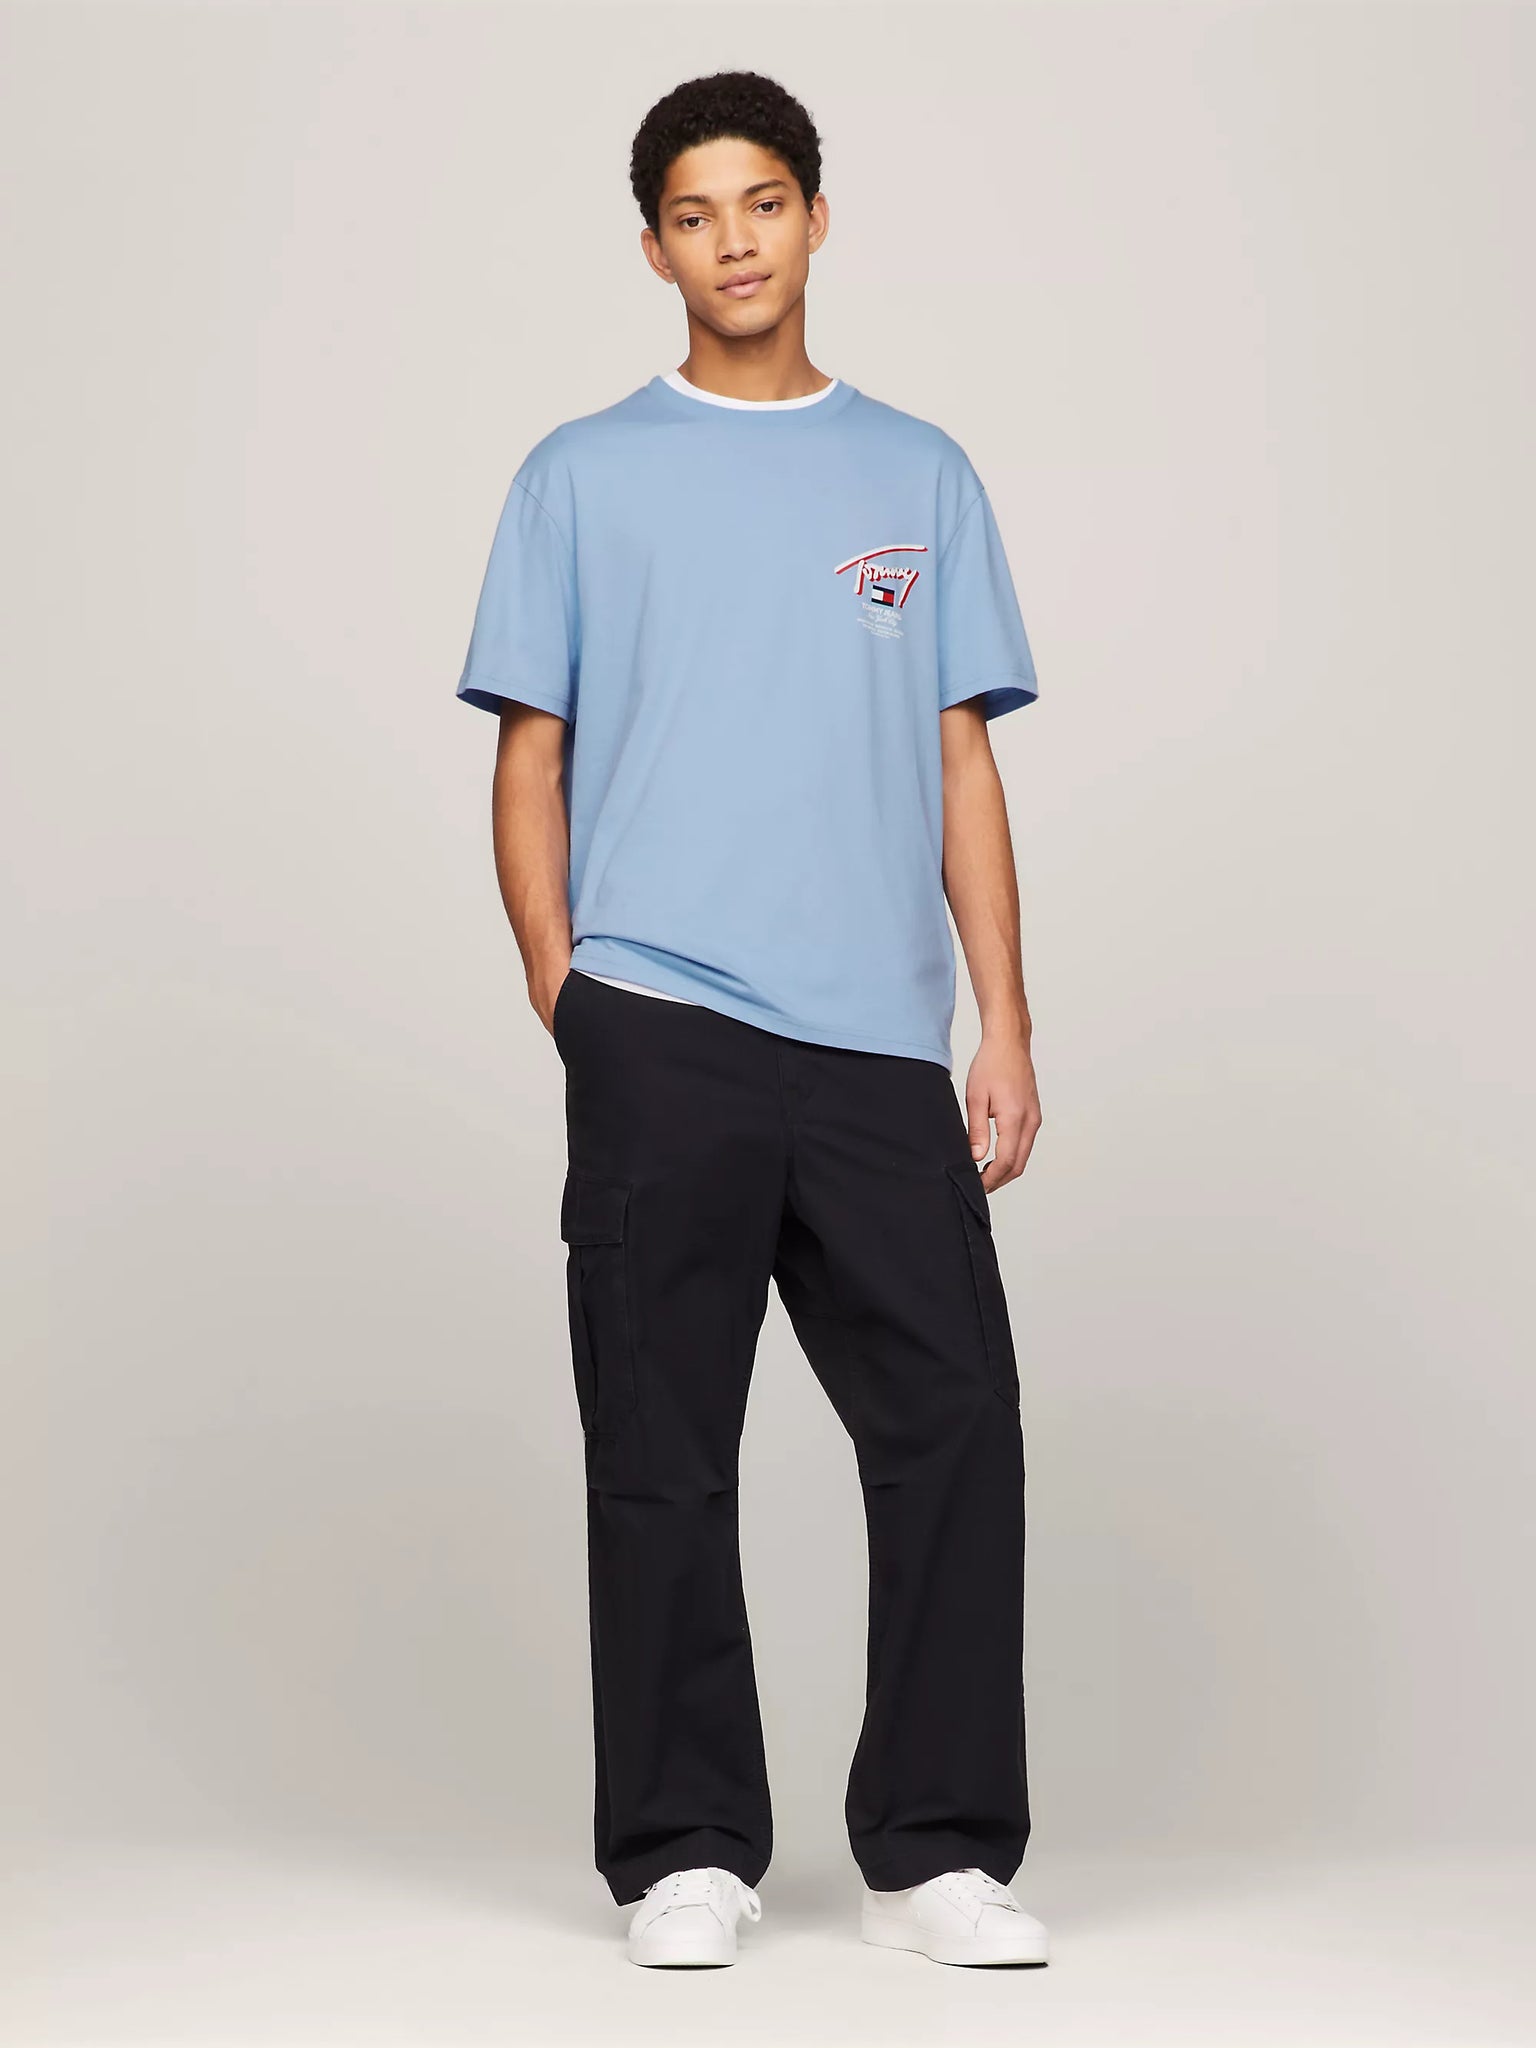 Tommy Jeans Classics T-Shirt mit markantem Logo auf der Rückseite 